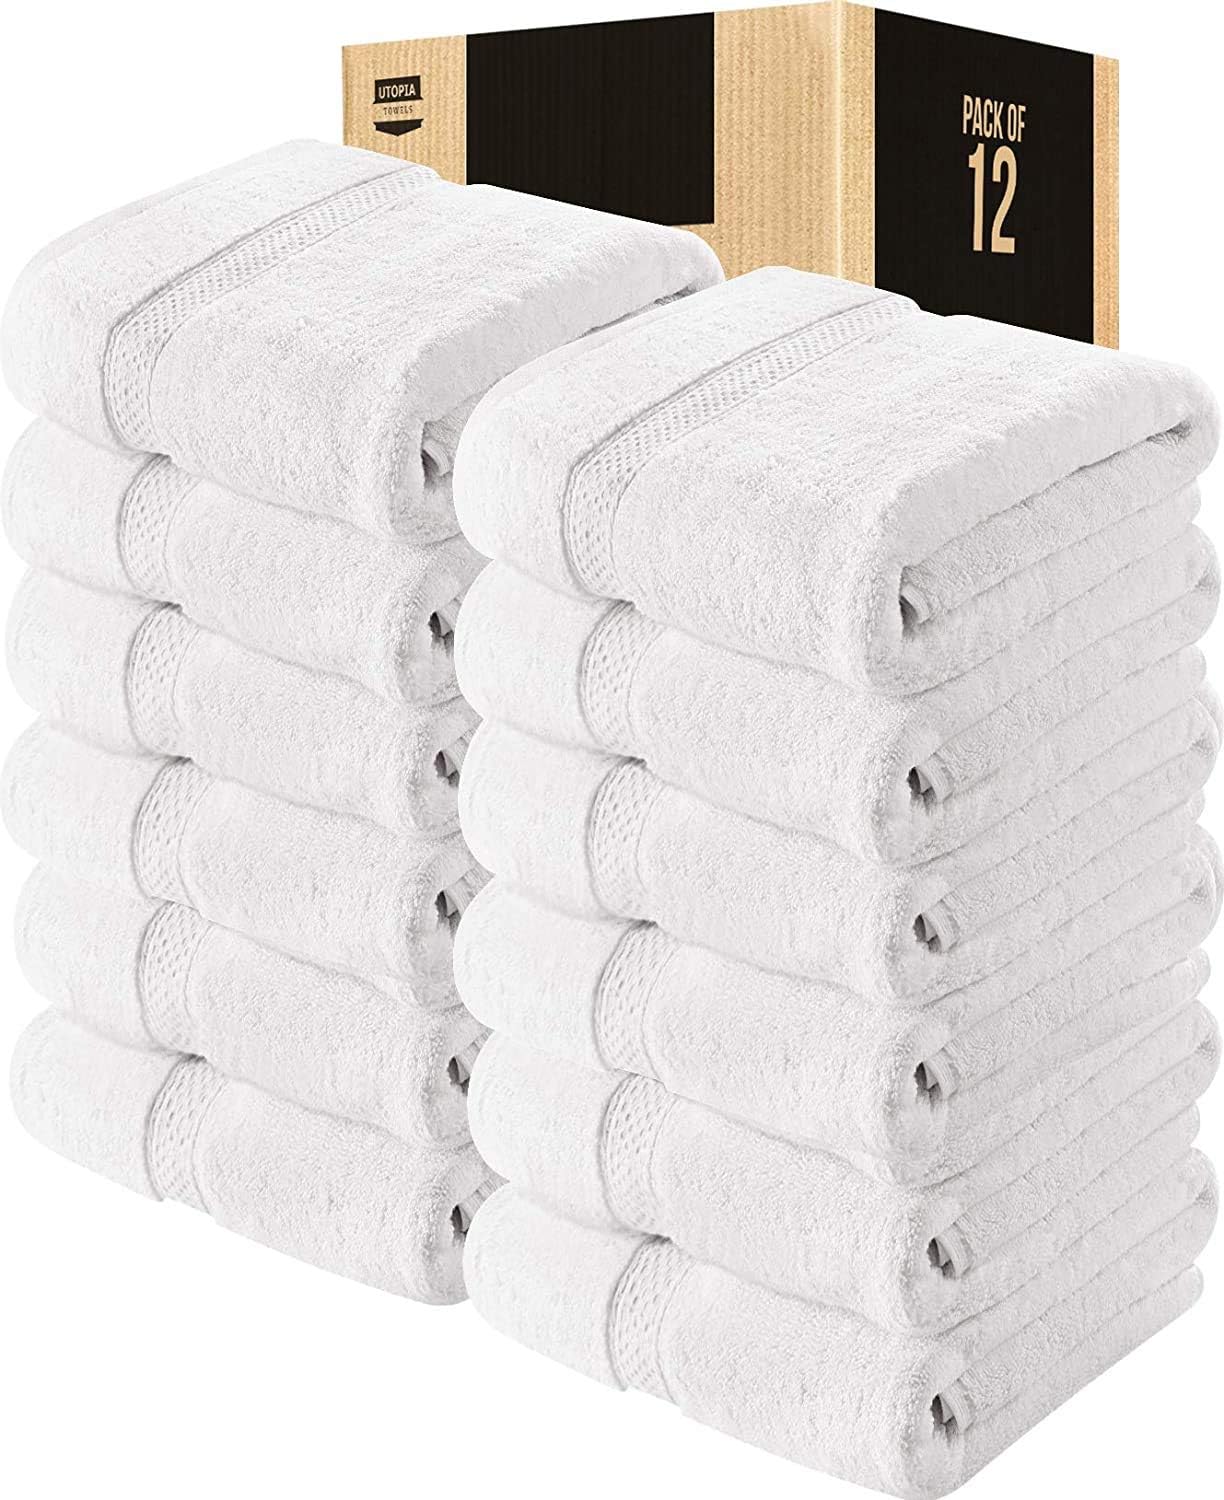 XL Premium Weight Cotton Pool Towel